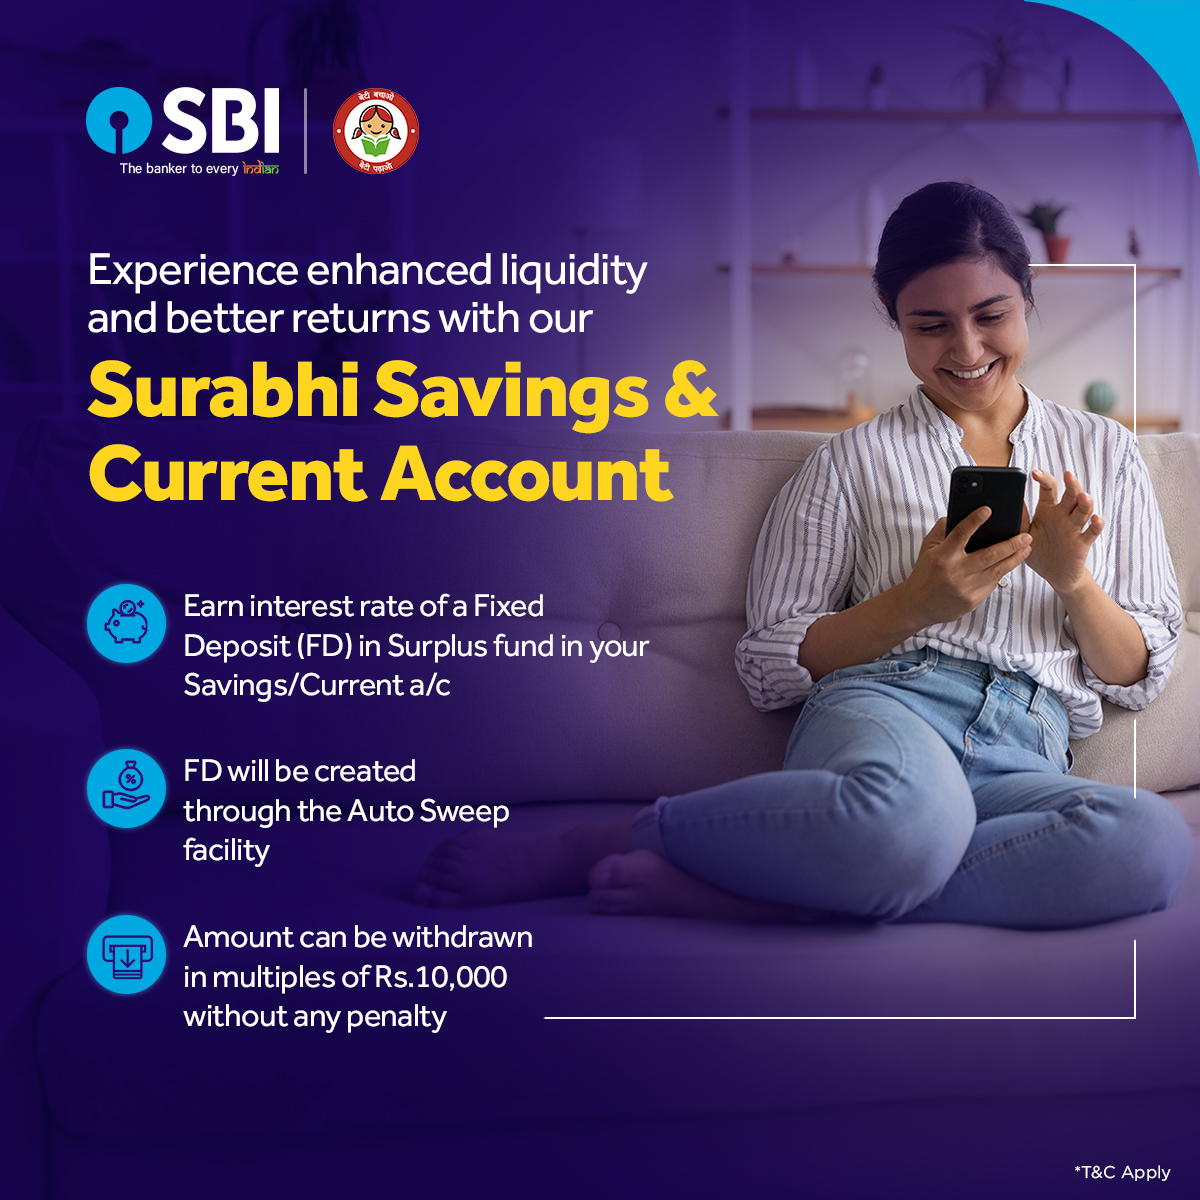 Discover the benefits of a Surabhi Savings & Current Account – where higher interest rates meet improved liquidity.

To learn more, visit: bank.sbi/web/business/s…

#SBI #SurabhiScheme #DeshKaFan #TheBankerToEveryIndian #SaveSmartWithSBI